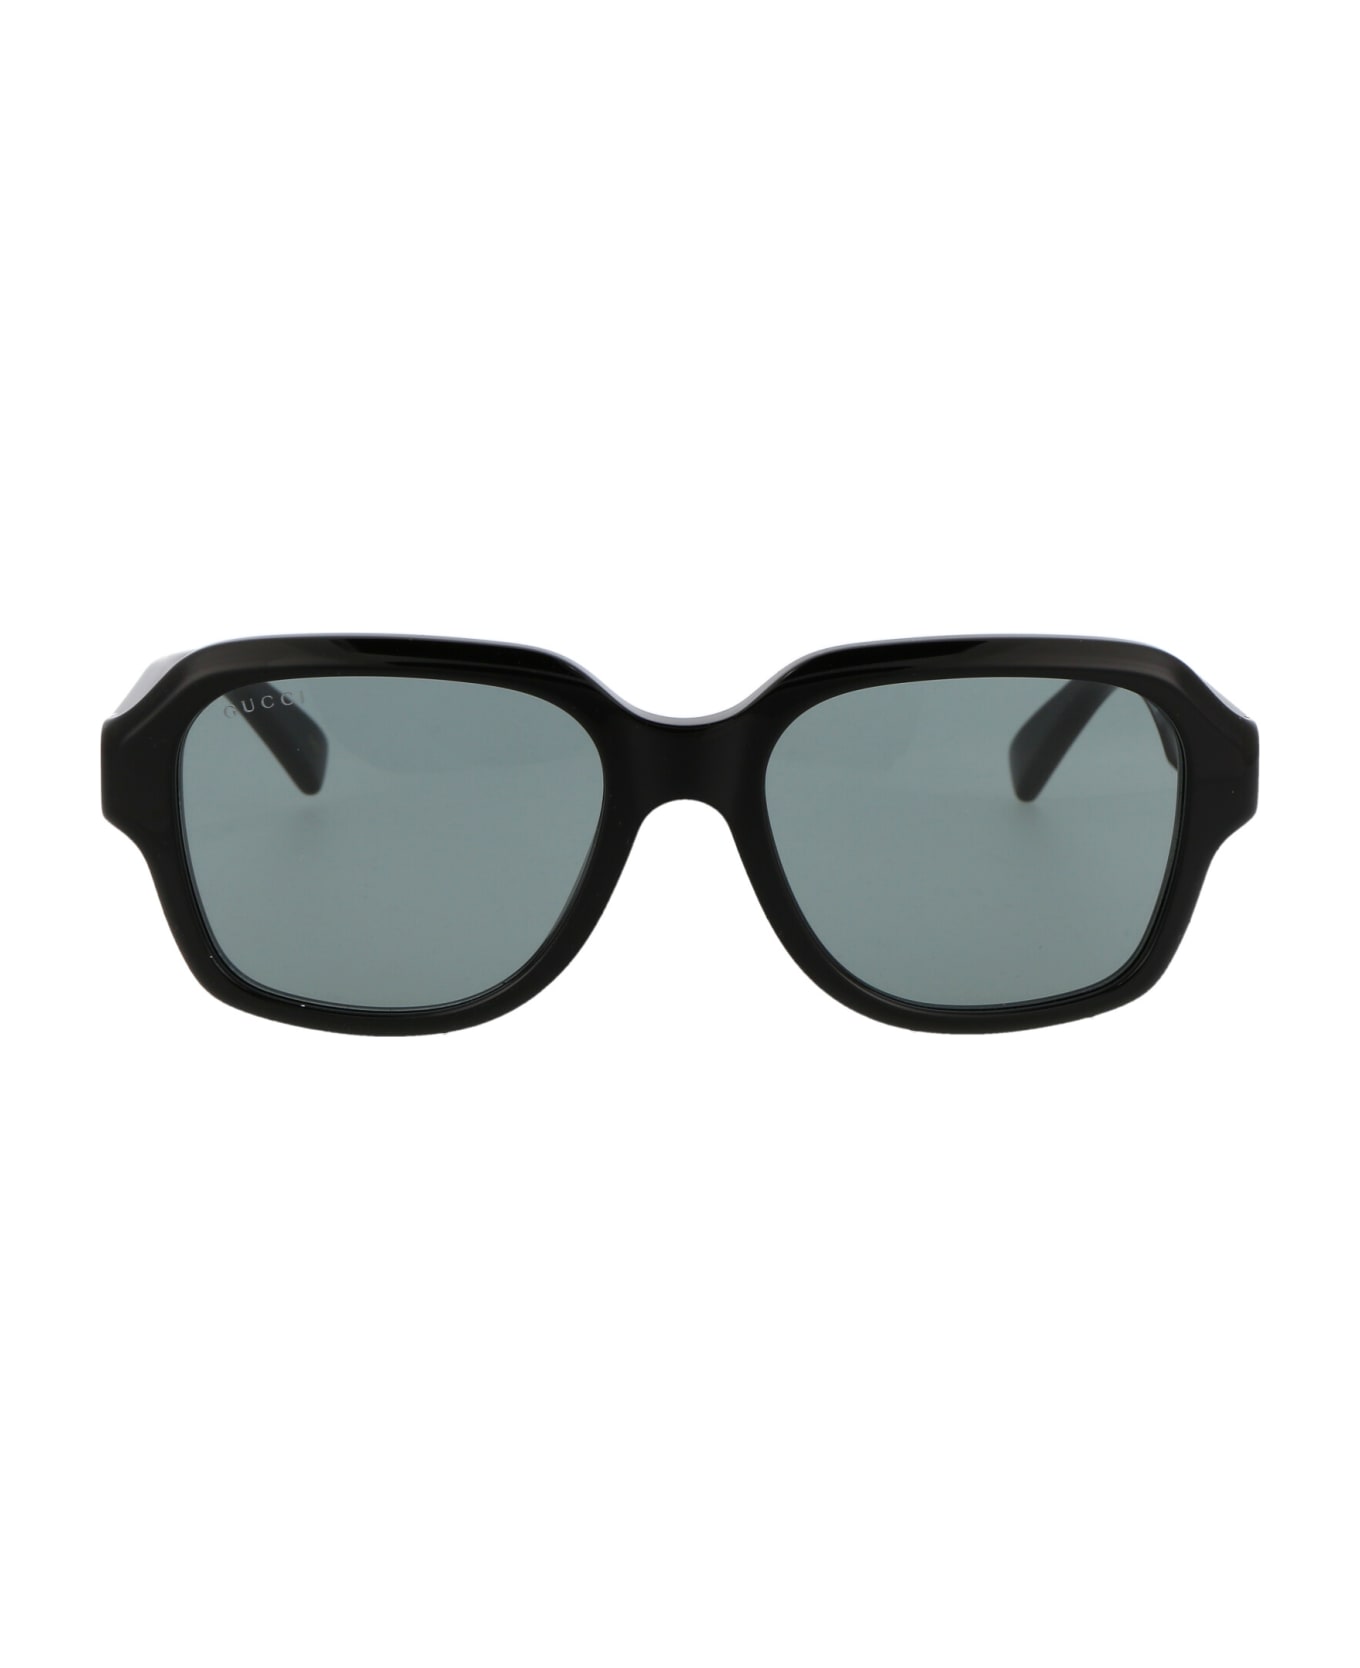 Gucci Eyewear Gg1174s Sunglasses - 001 BLACK BLACK SMOKE